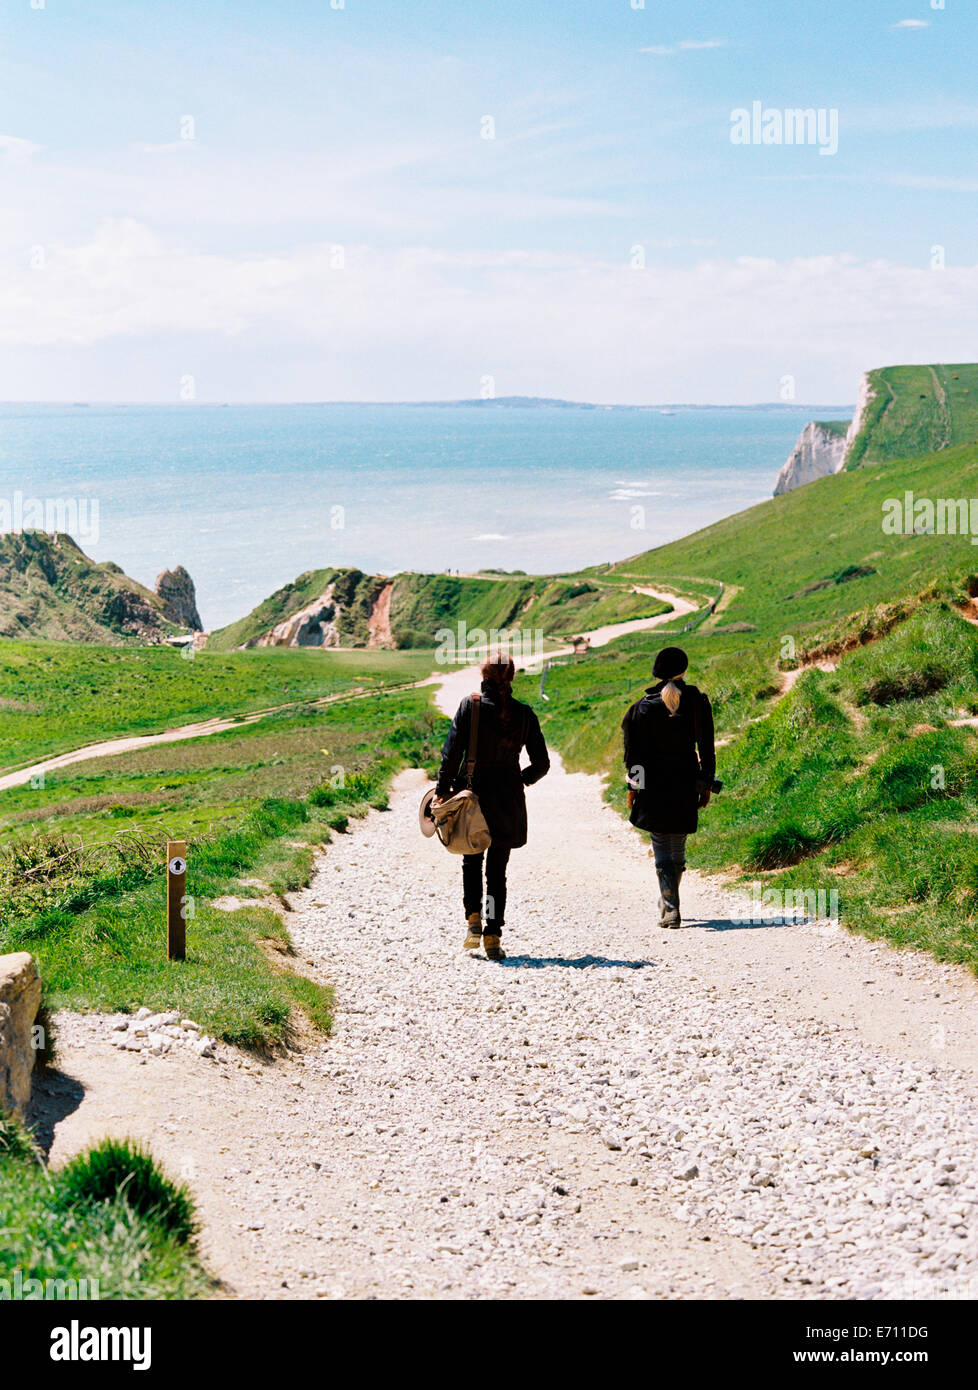 Two women walking on a coastal footpath along cliffs. Stock Photo